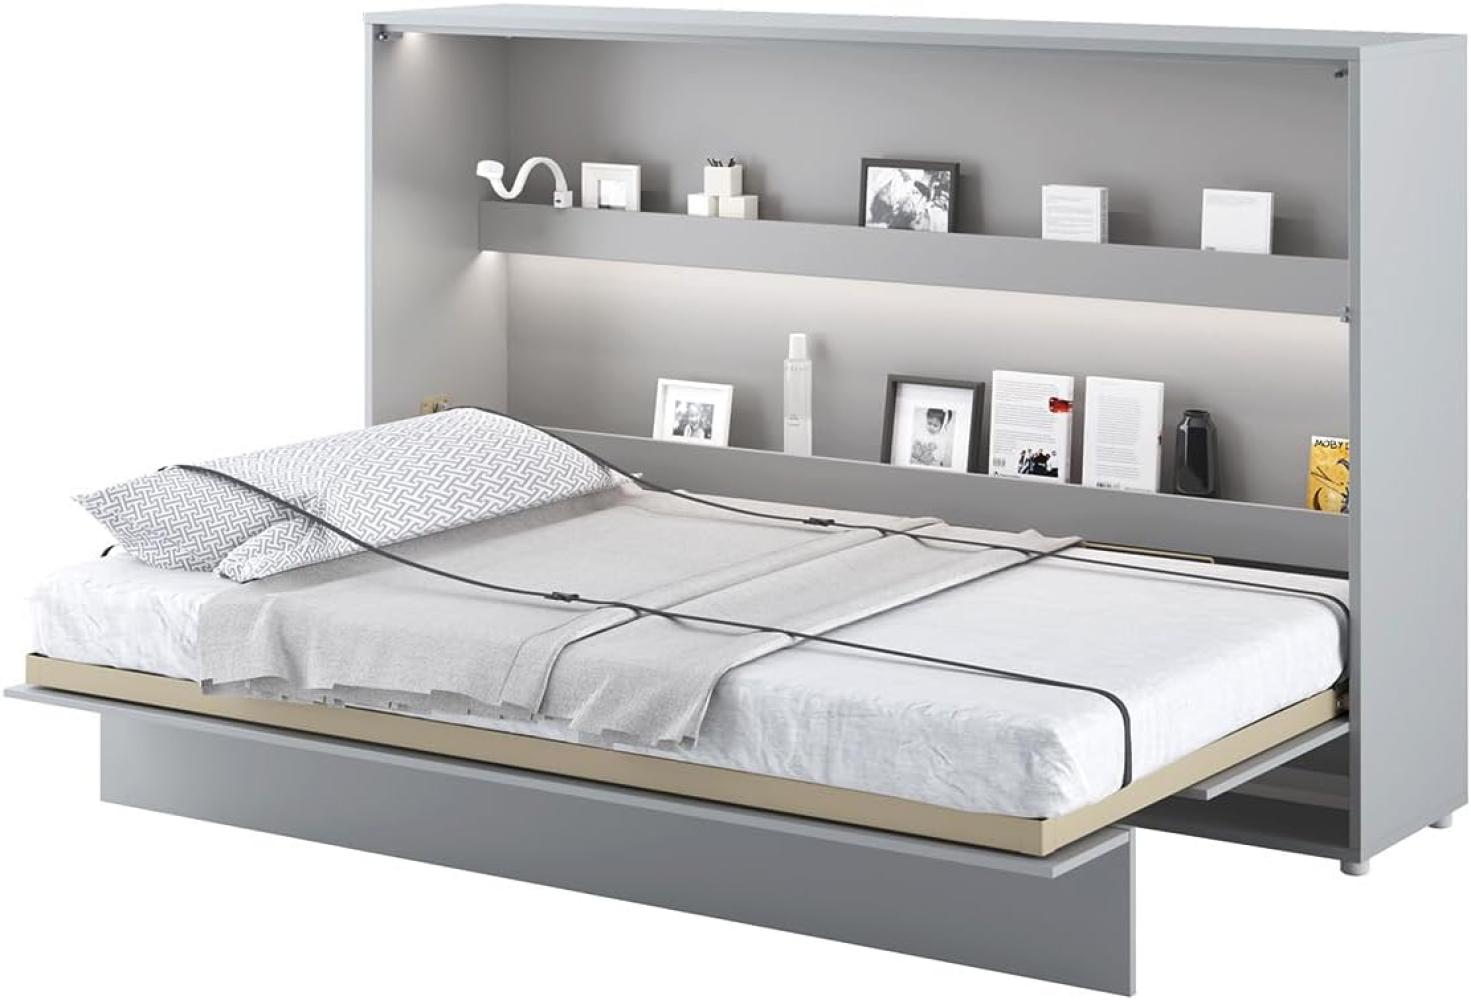 MEBLINI Schrankbett Bed Concept - BC-05 - 120x200cm Horizontal - Grau Matt mit Matratze - Wandbett mit Lattenrost - Klappbett mit Schrank - Wandklappbett - Murphy Bed - Bettschrank Bild 1